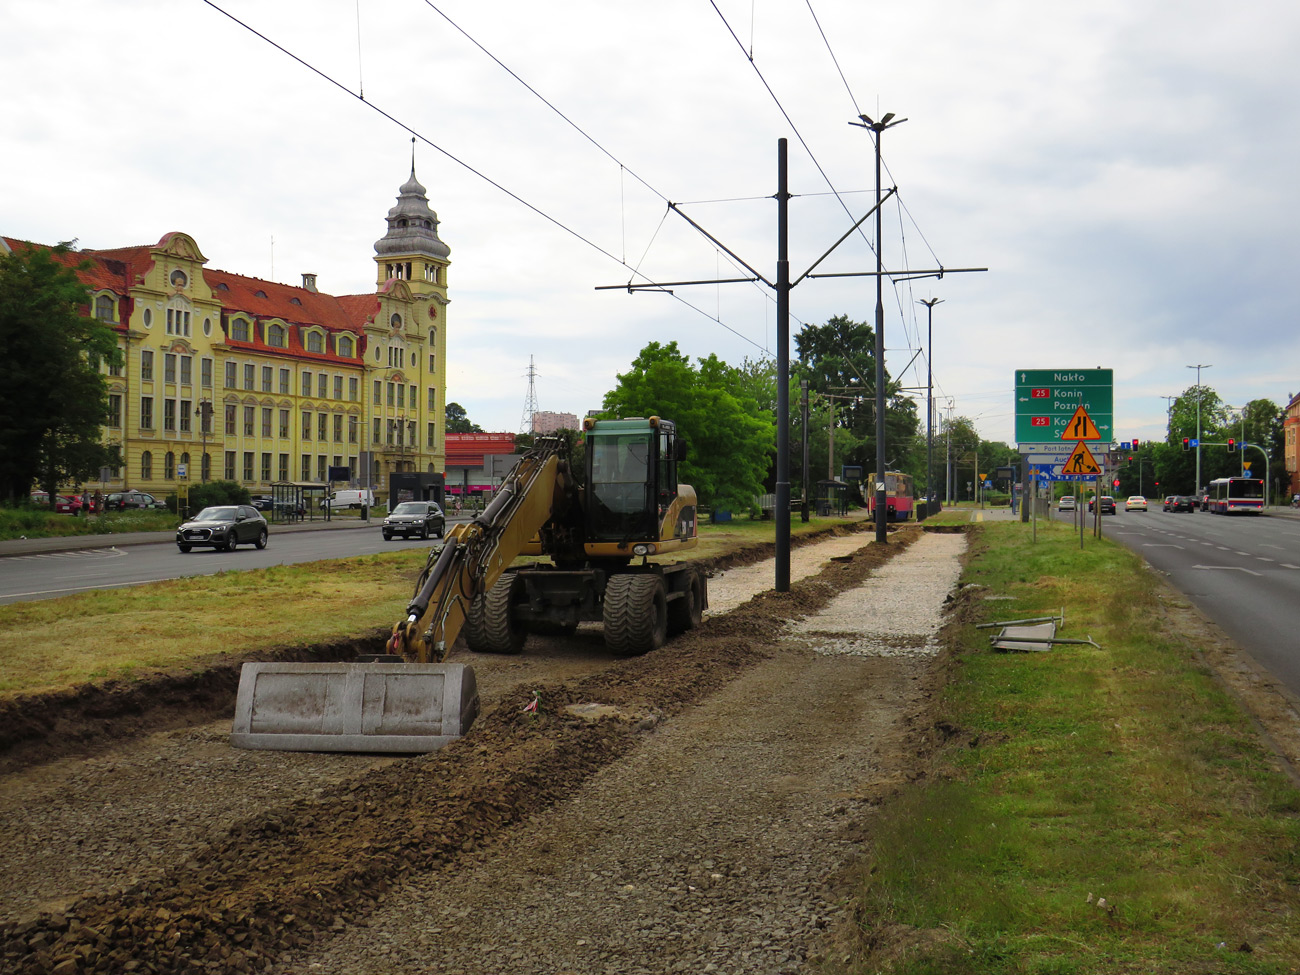 Bydgoszcz — Tramway Lines' Construction